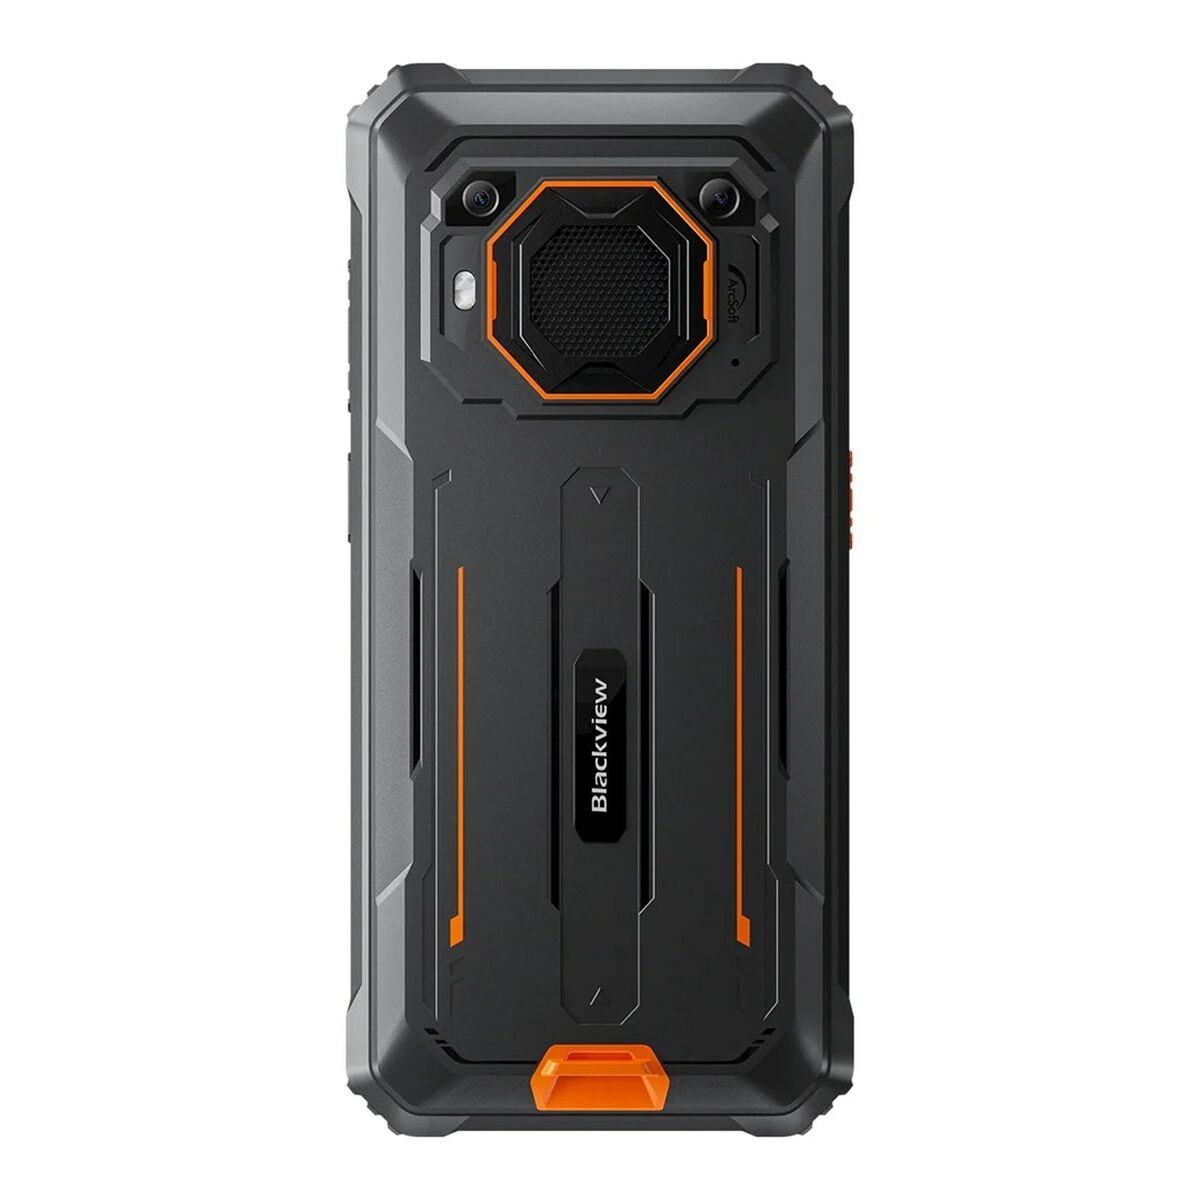 Smartphone Blackview BV6200 Pro 6,56" 128 GB 4 GB RAM Octa Core MediaTek Helio P35 Schwarz Orange - CA International  